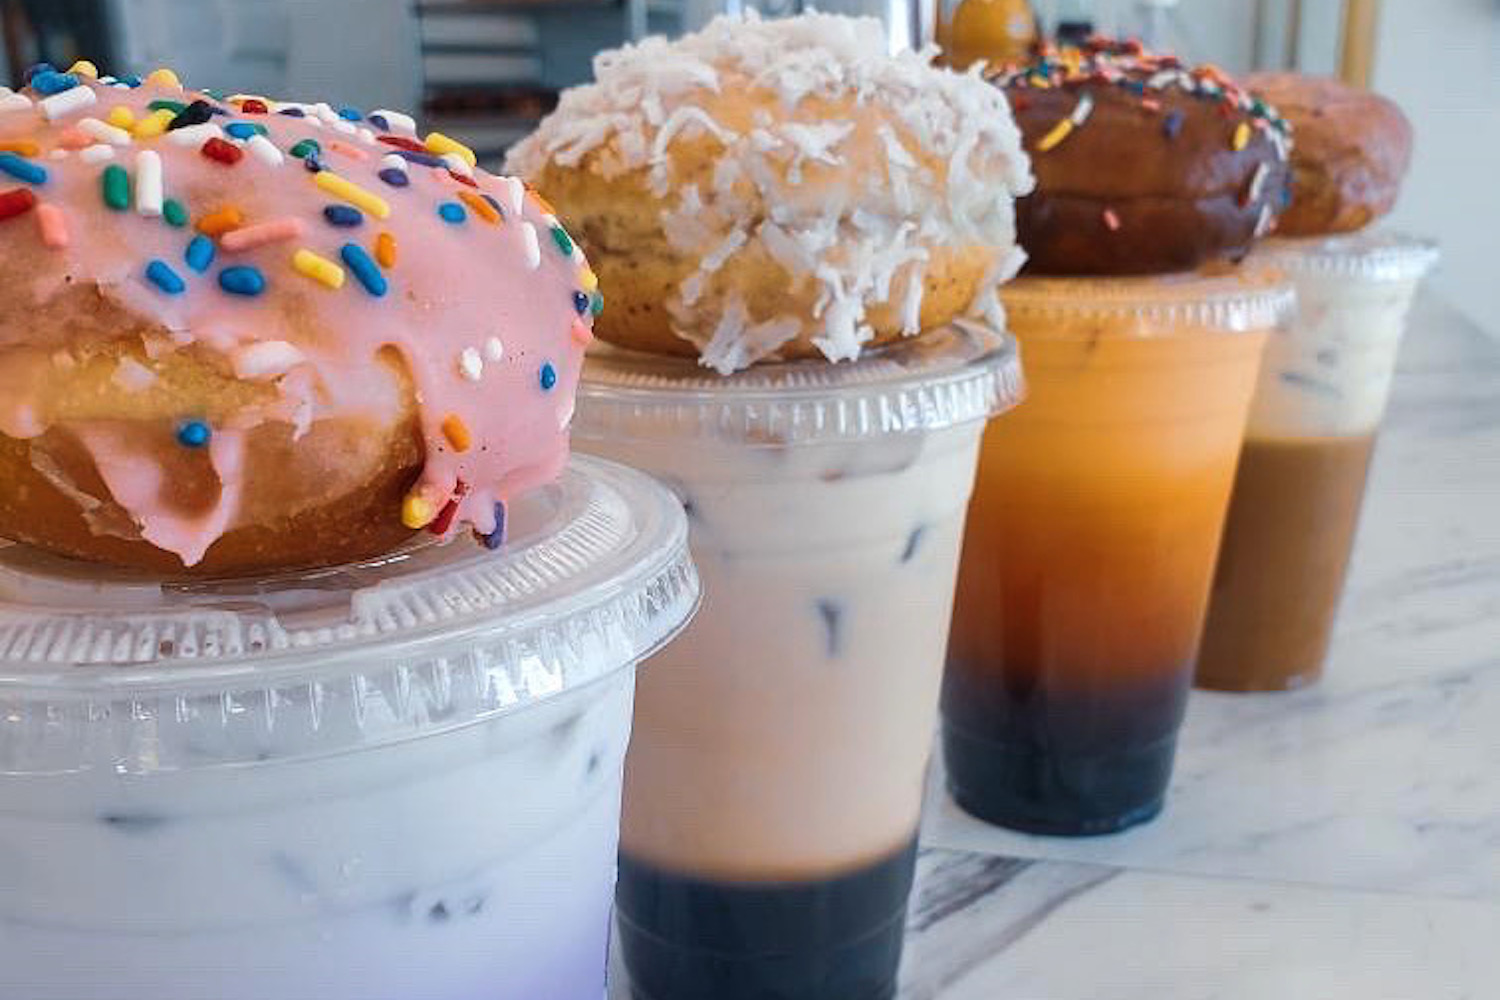 District Doughnut has been delighting D.C. denizens for over a decade